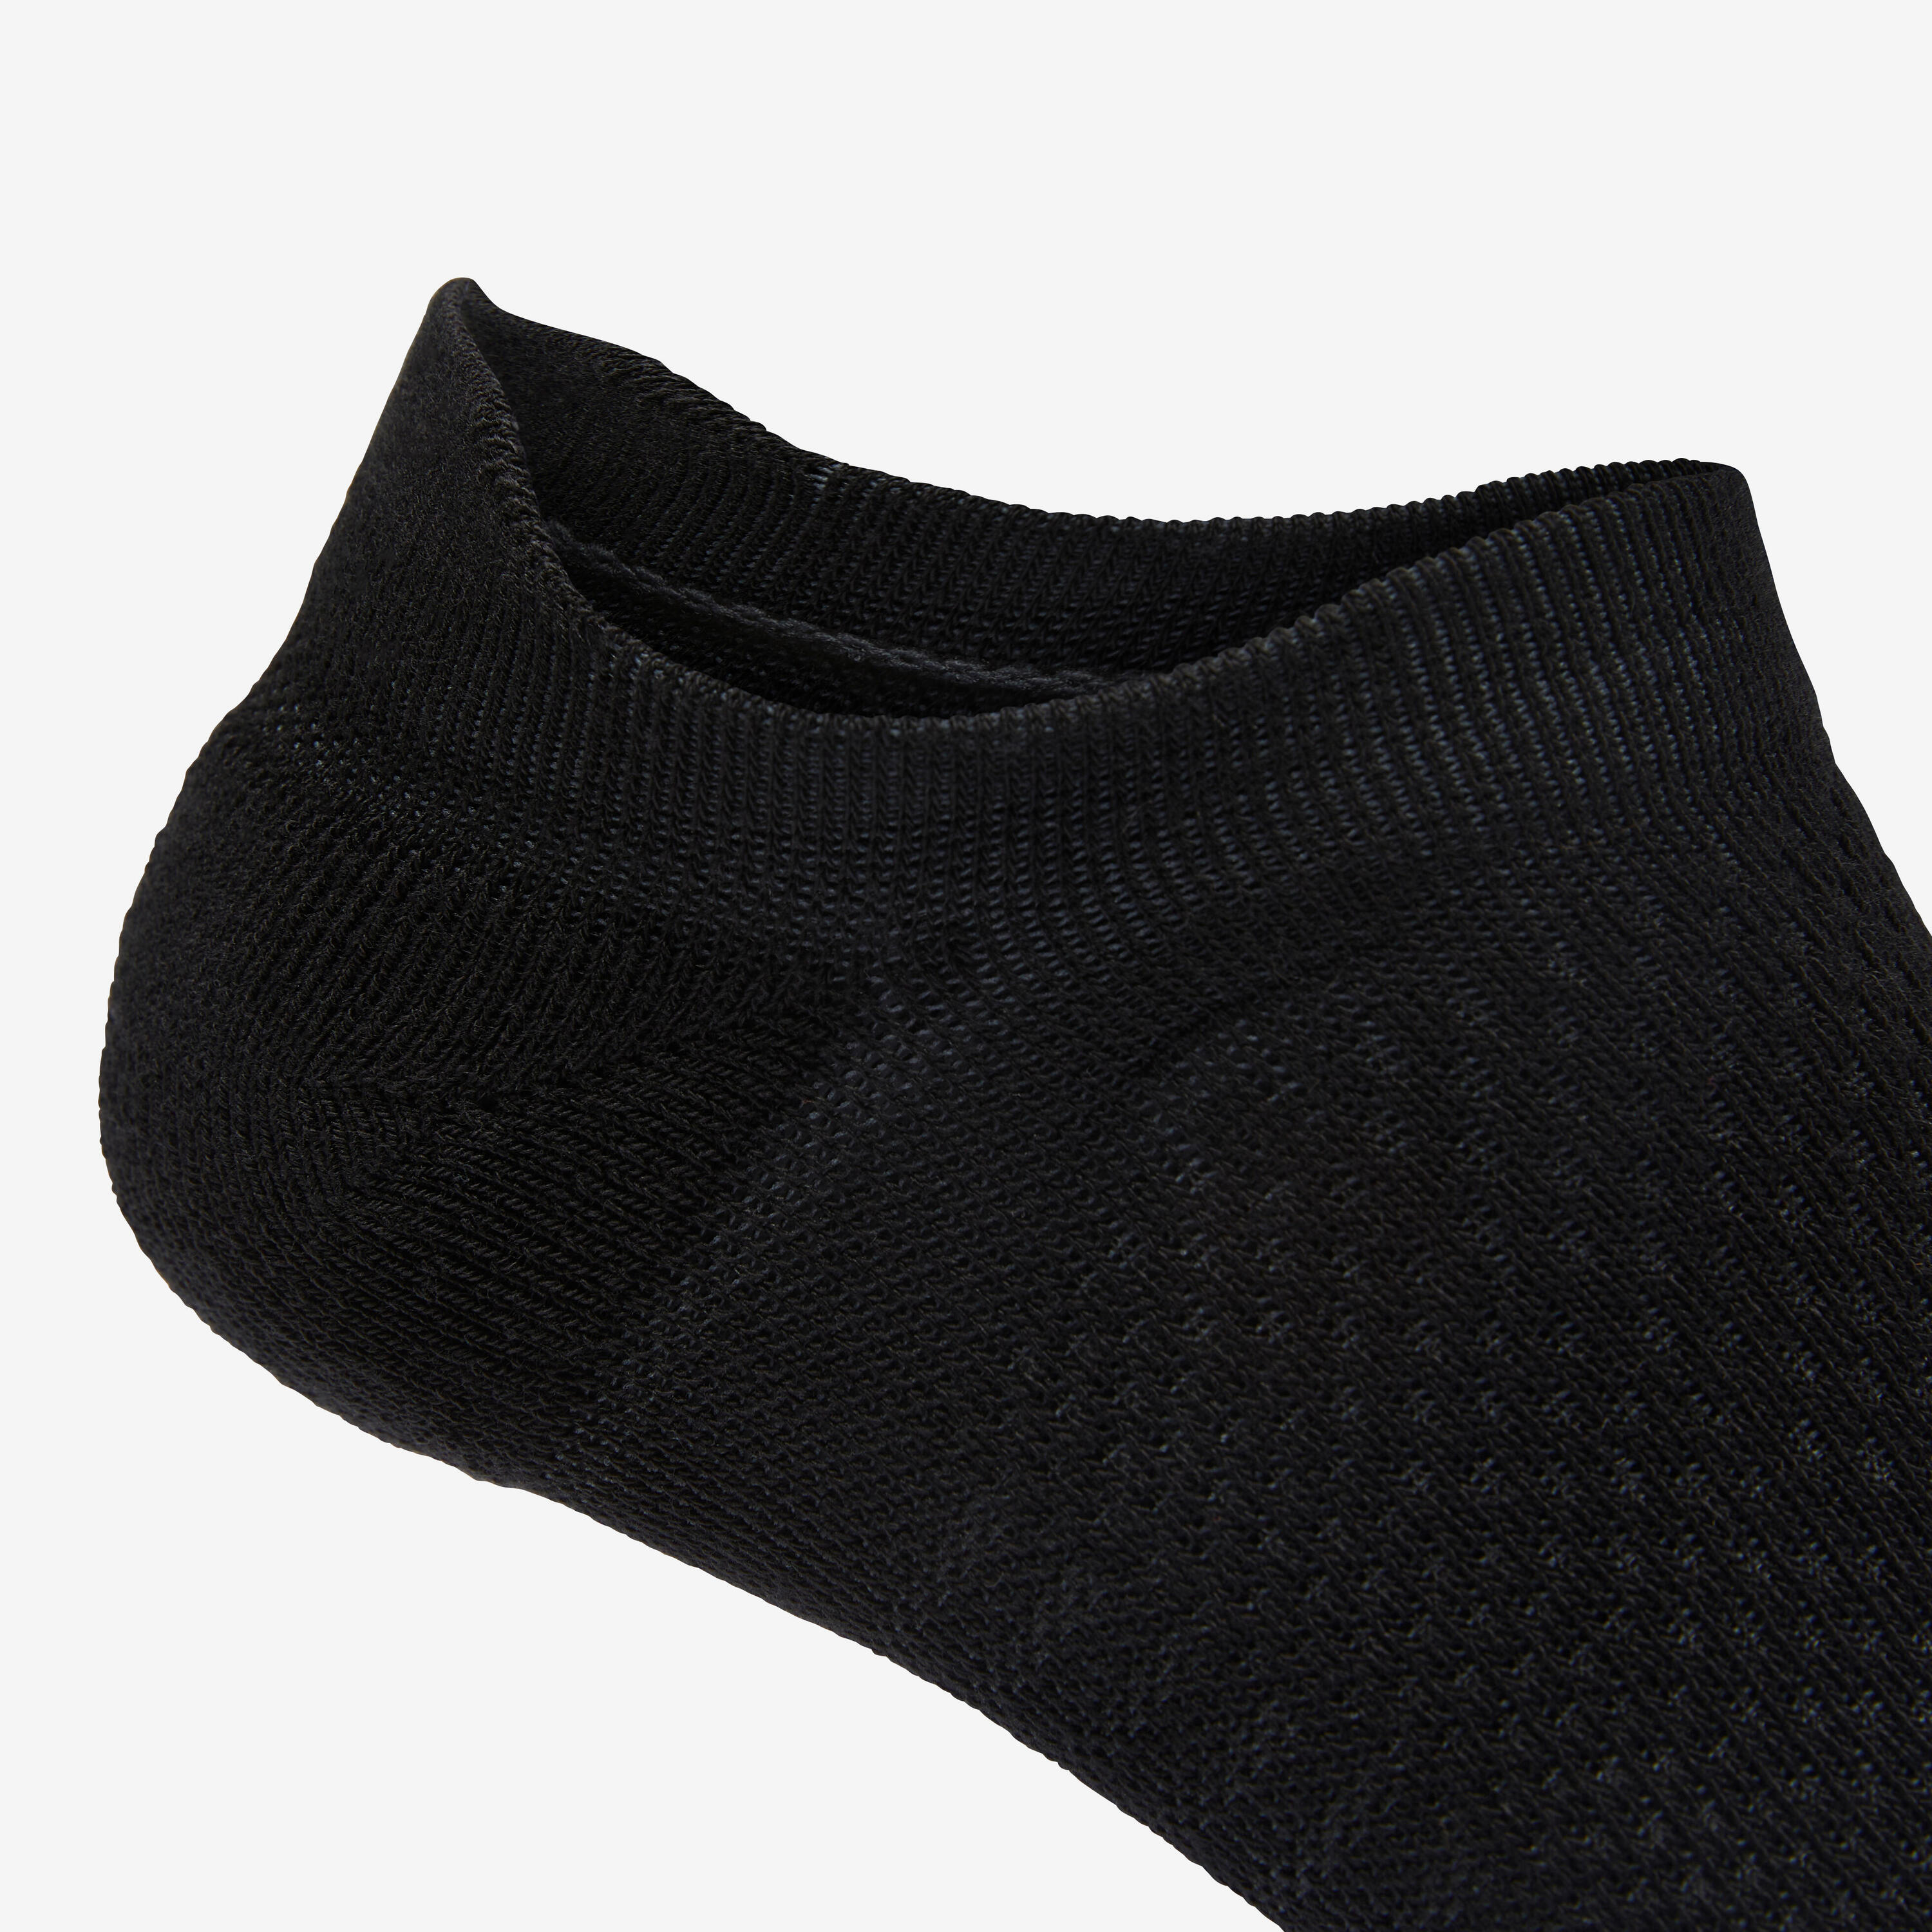 URBAN WALK Deocell tech ankle socks - pack of 2 - black 5/6